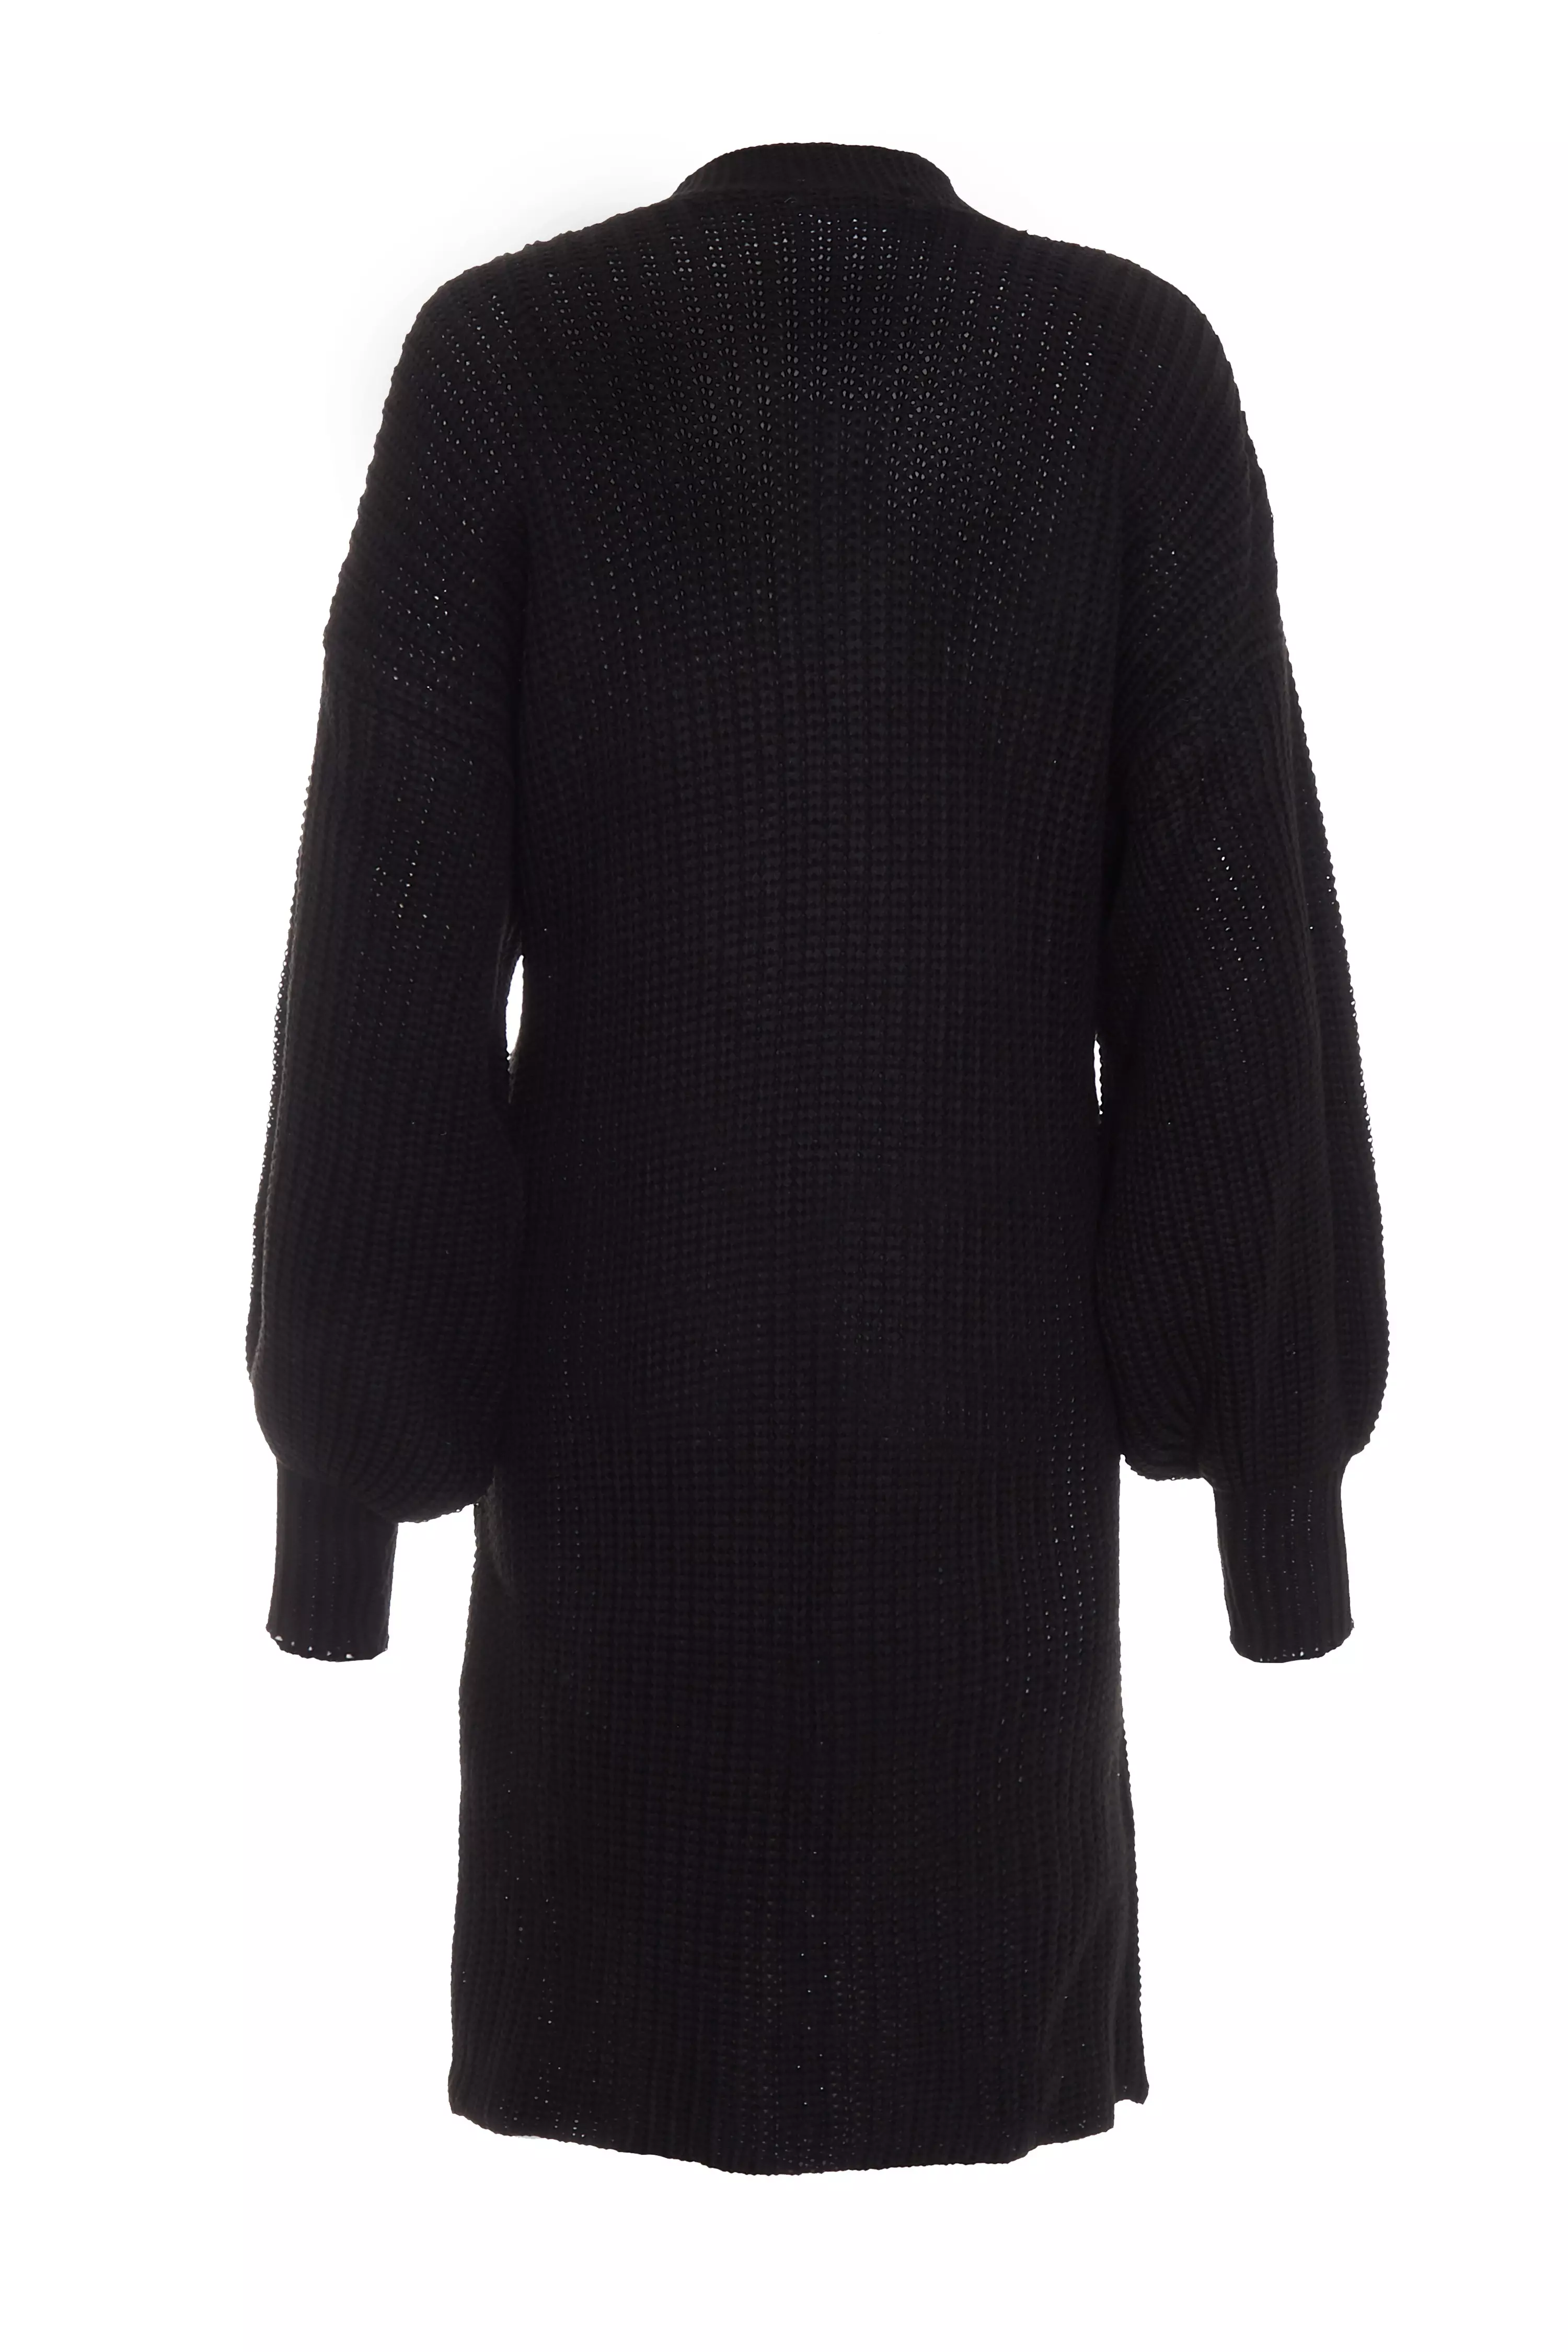 Black Knitted Longline Cardigan - QUIZ Clothing